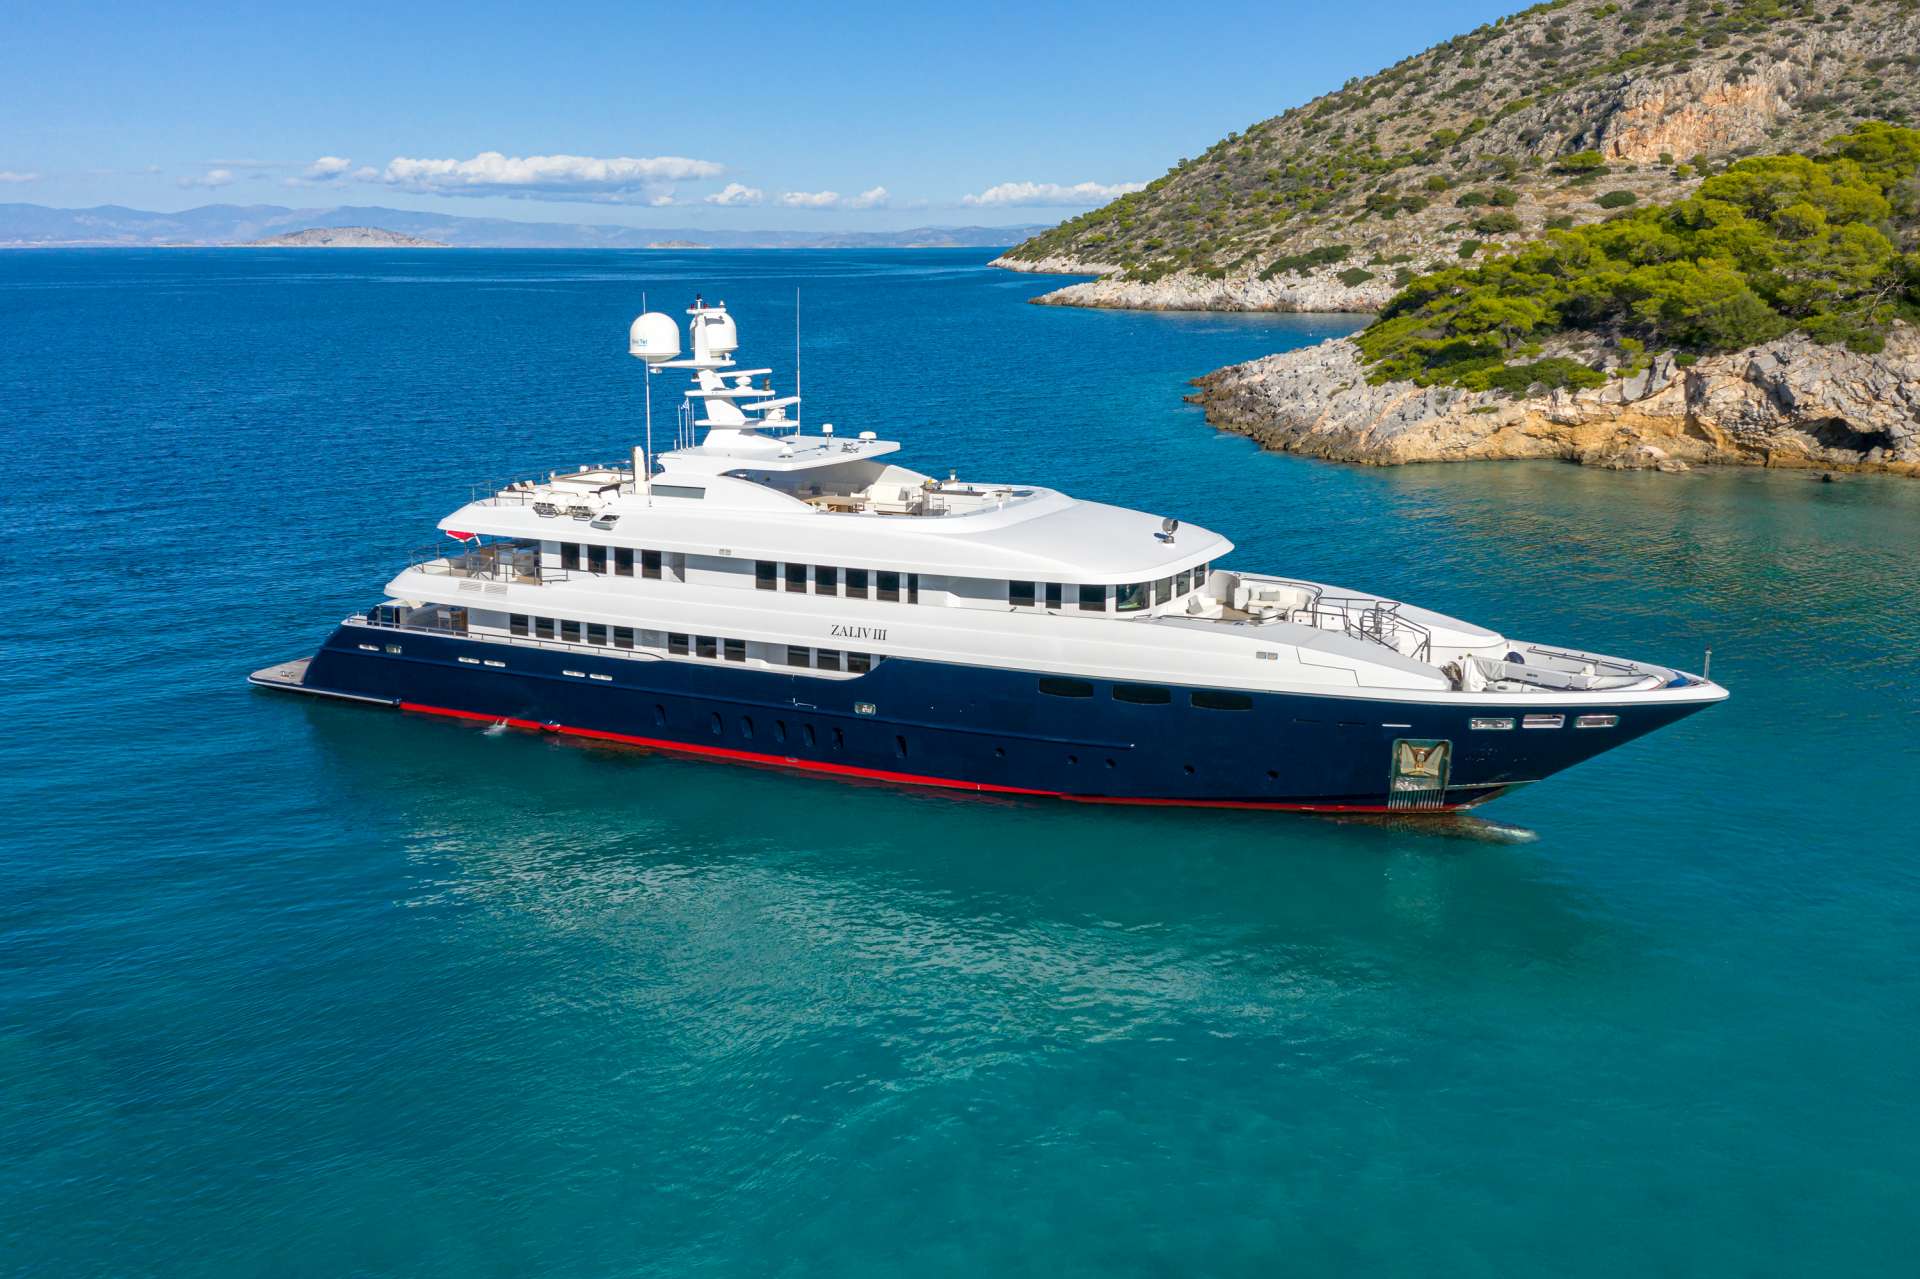 zaliv iii - Luxury yacht charter Montenegro & Boat hire in East Mediterranean 1